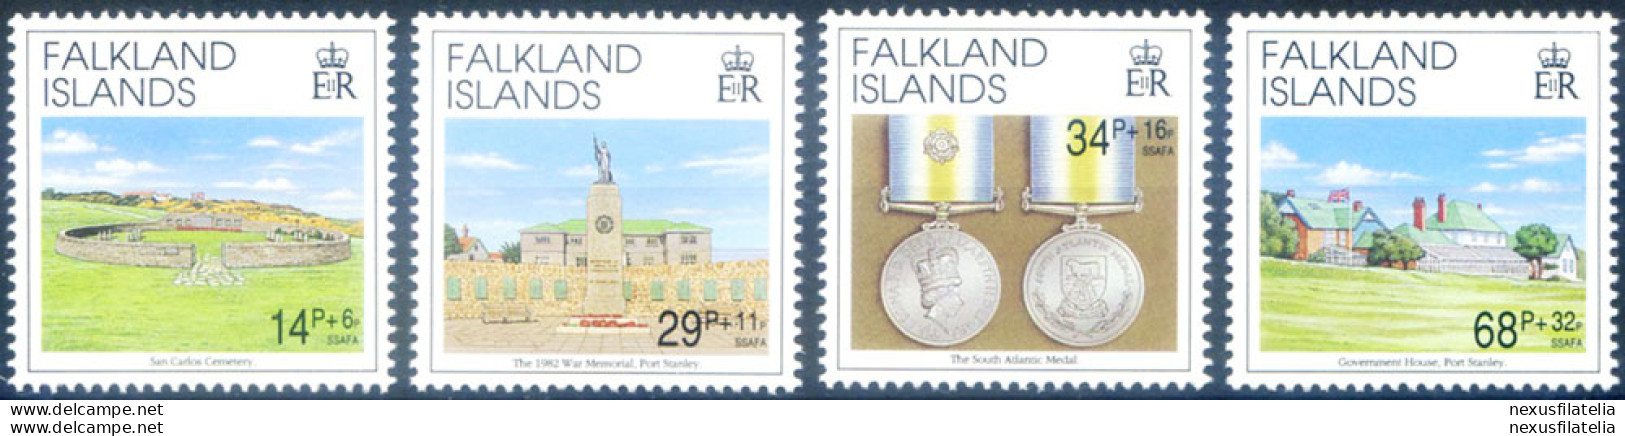 Guerra Delle Falkland 1992. - Falklandeilanden